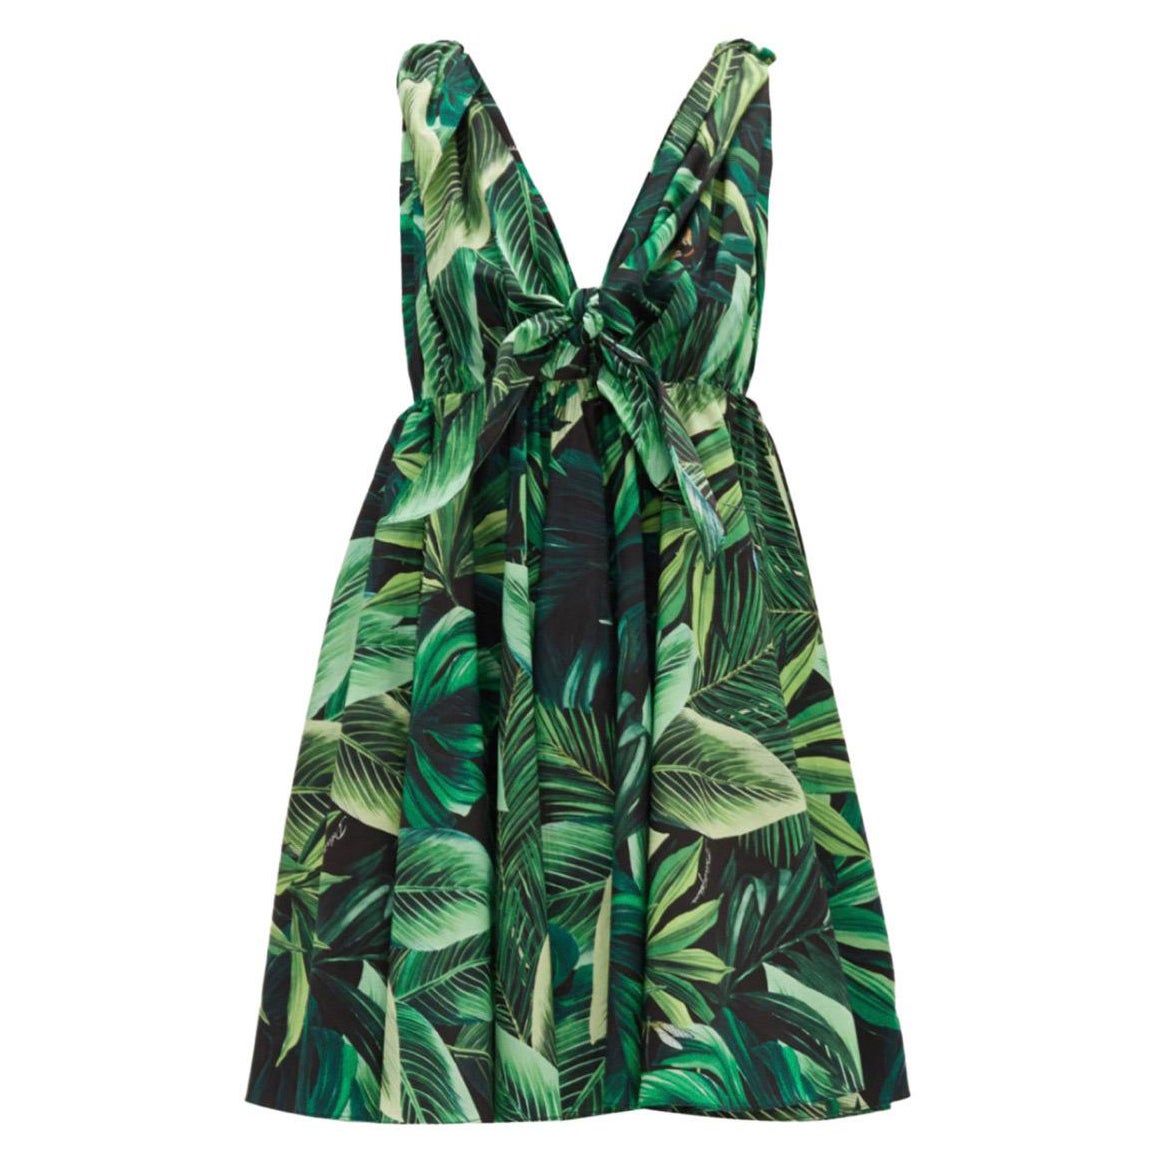 Iconic Dolce & Gabbana’s green Sicilian jungle dress For Sale